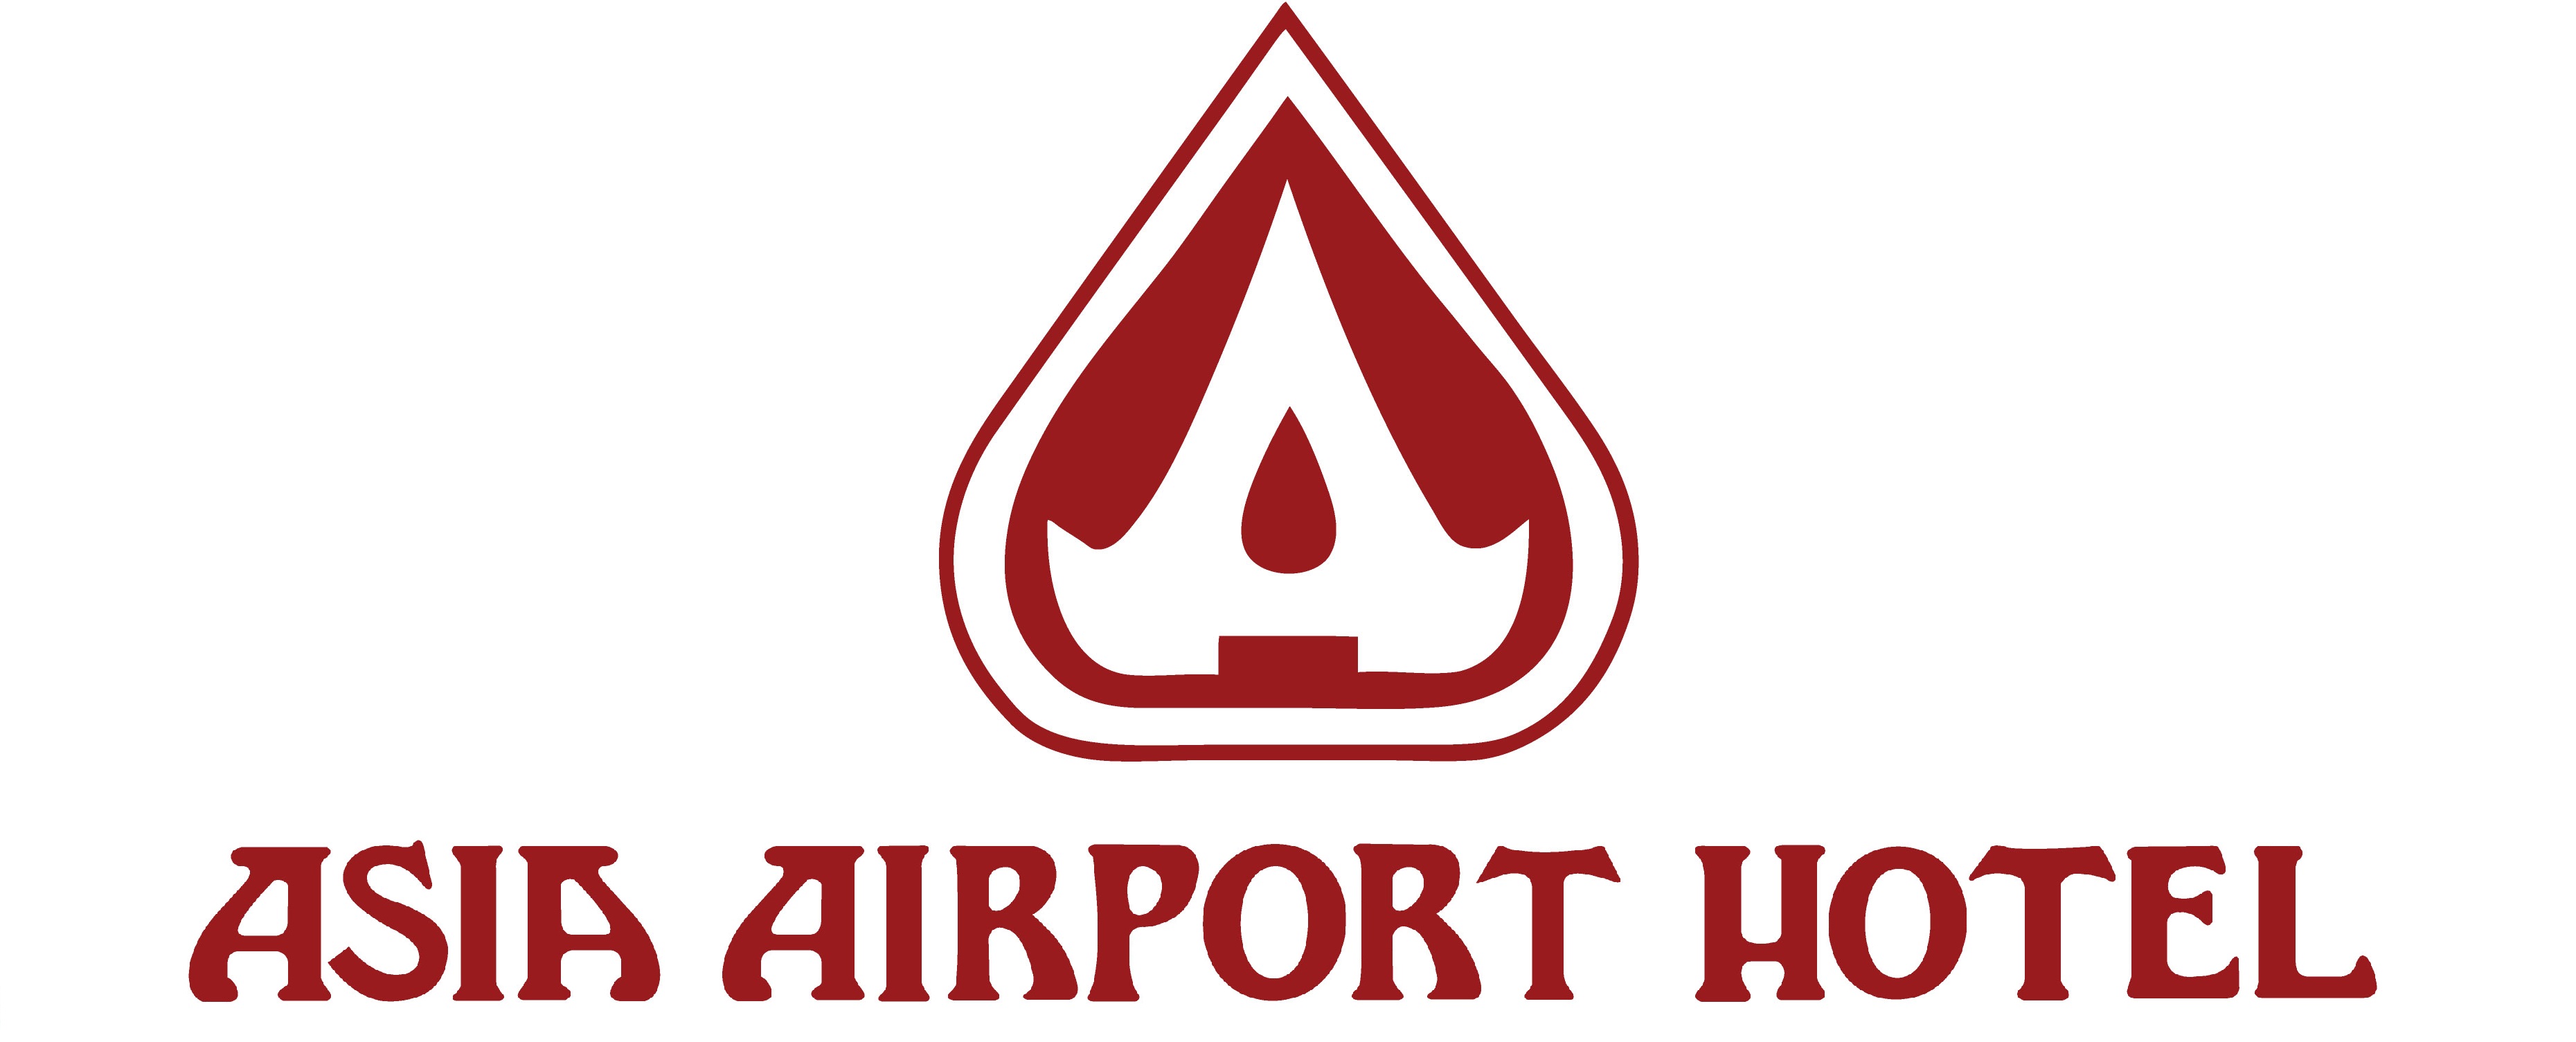 ASIA AIRPORT HOTEL 